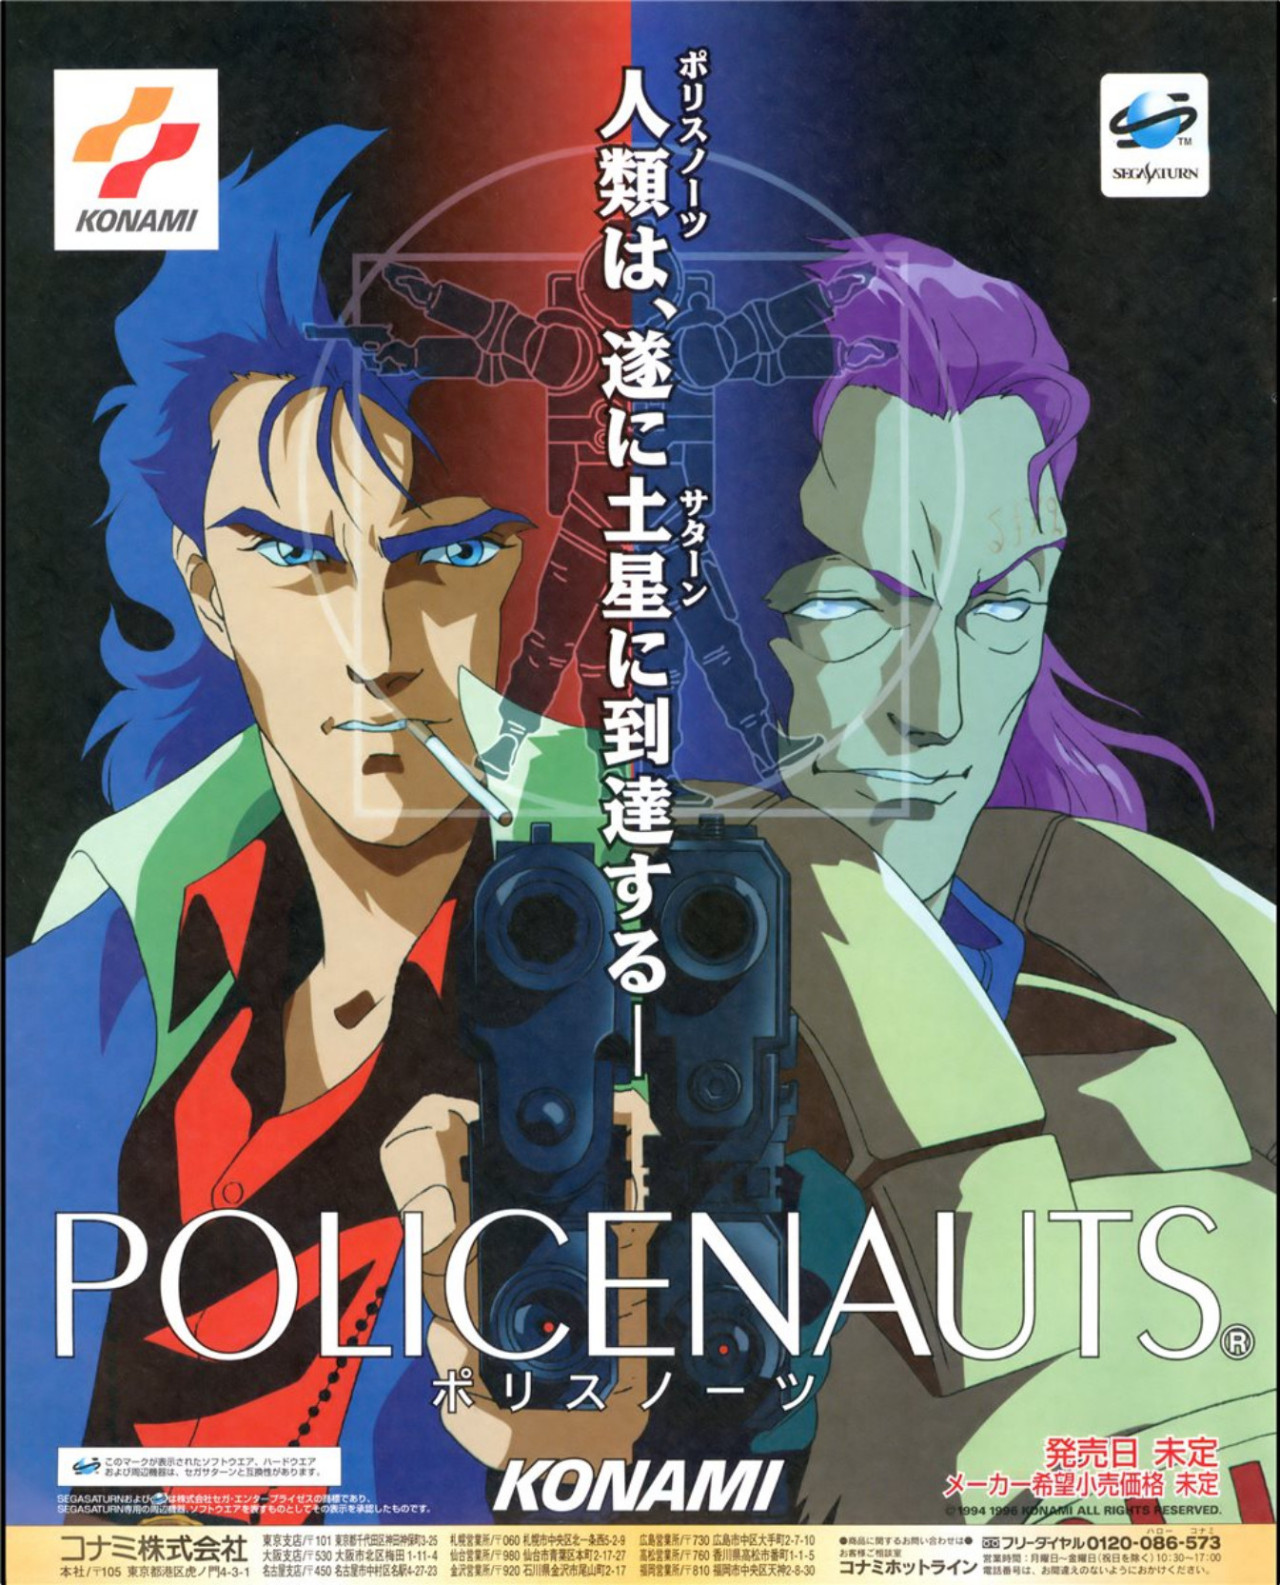 ‘Policenauts’[SAT] [JAPAN] [MAGAZINE] [1996]
• Sega Saturn Magazine, May 10, 1996
• Scanned by Akane, via Retro CDN